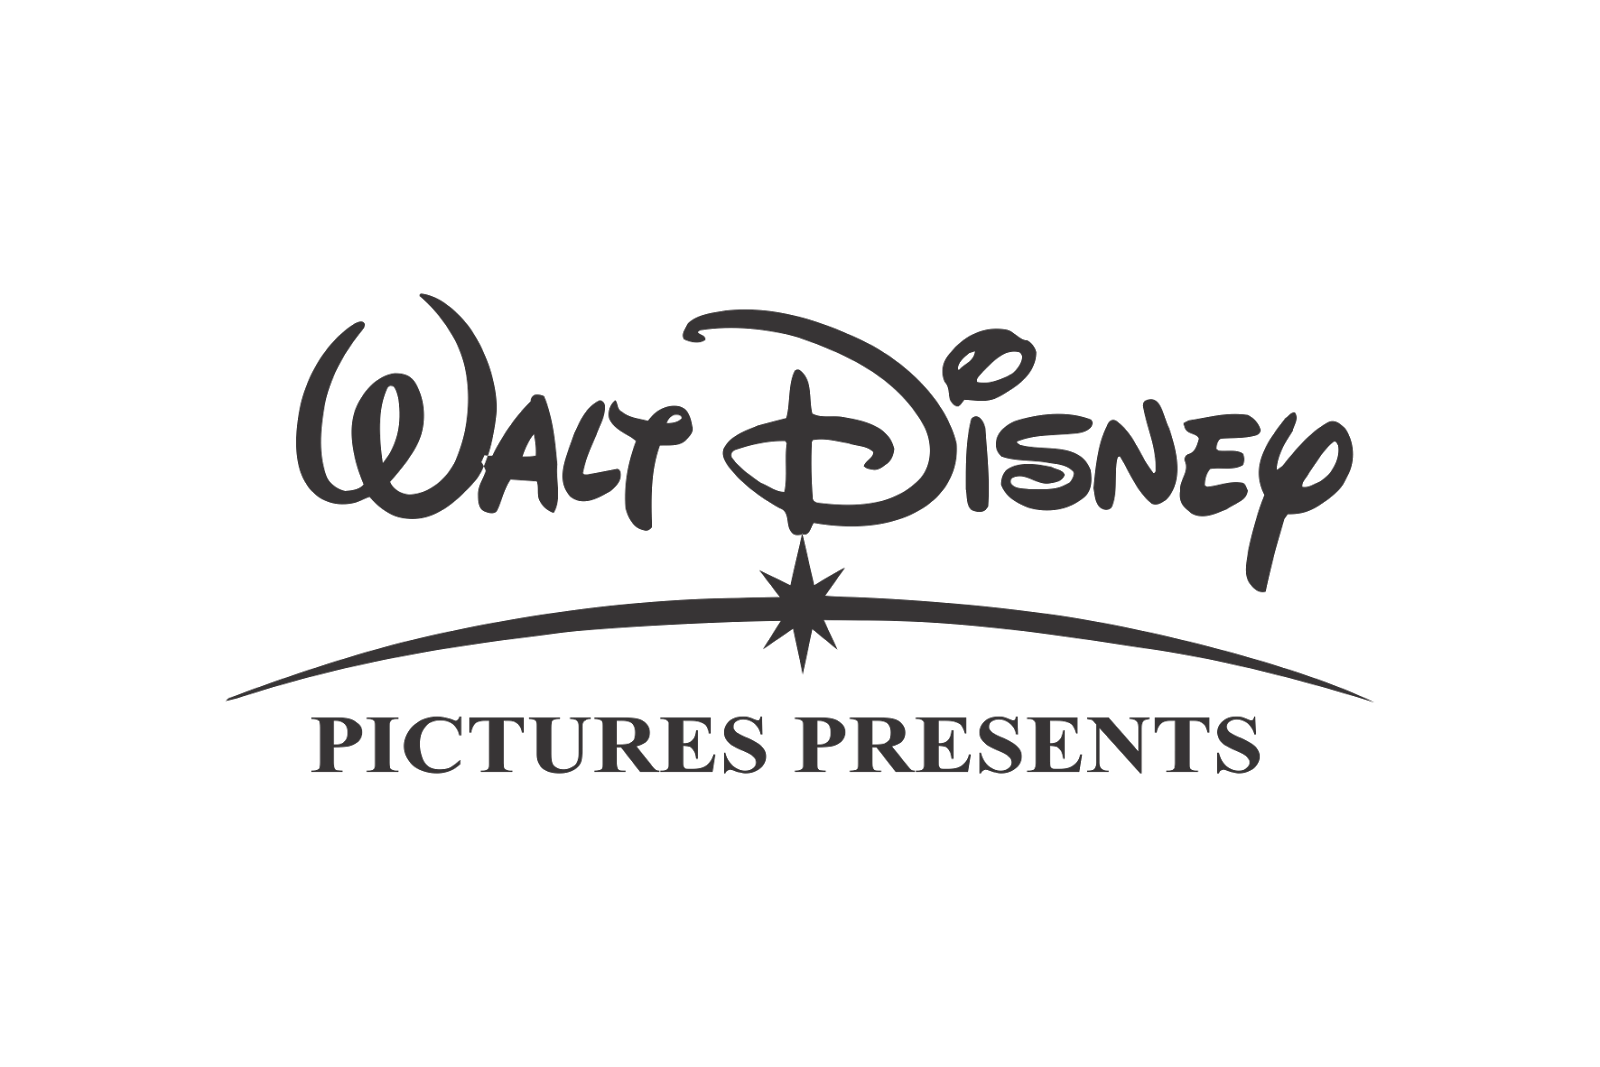 Walt Disney Presents Logo - Walt disney picture presents Logos